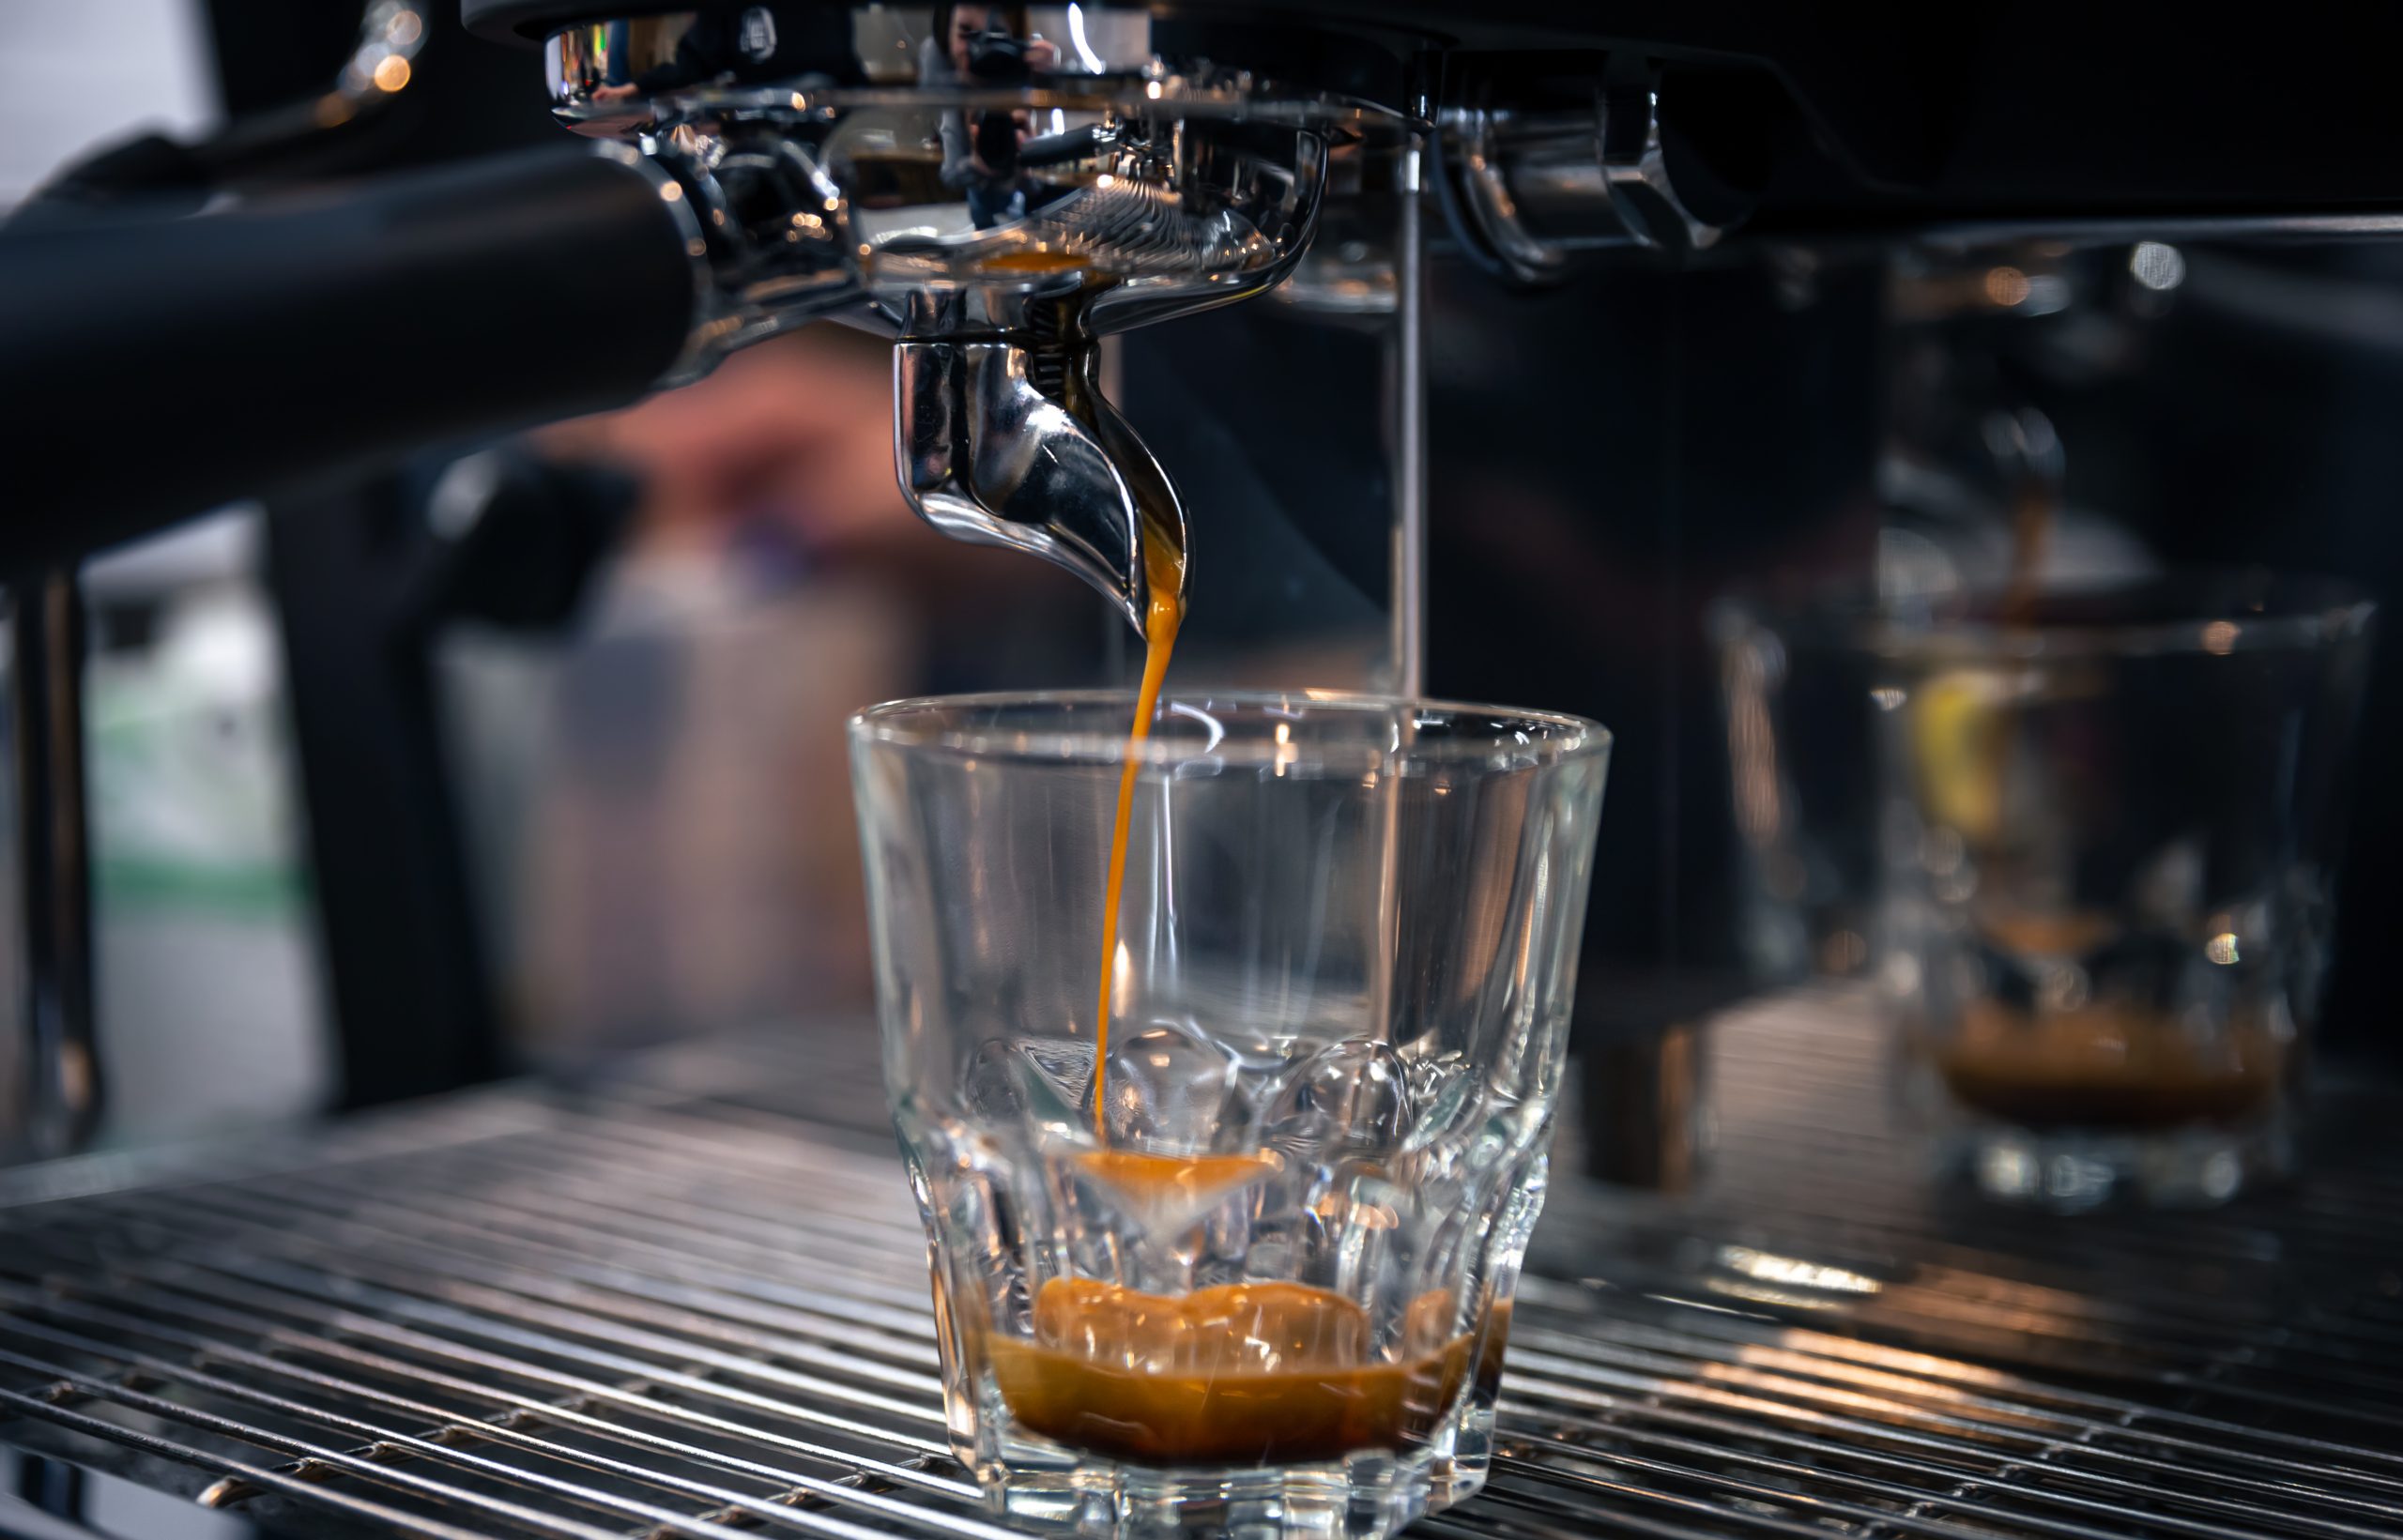 The process of preparing espresso in a professional coffee machine, close-up.